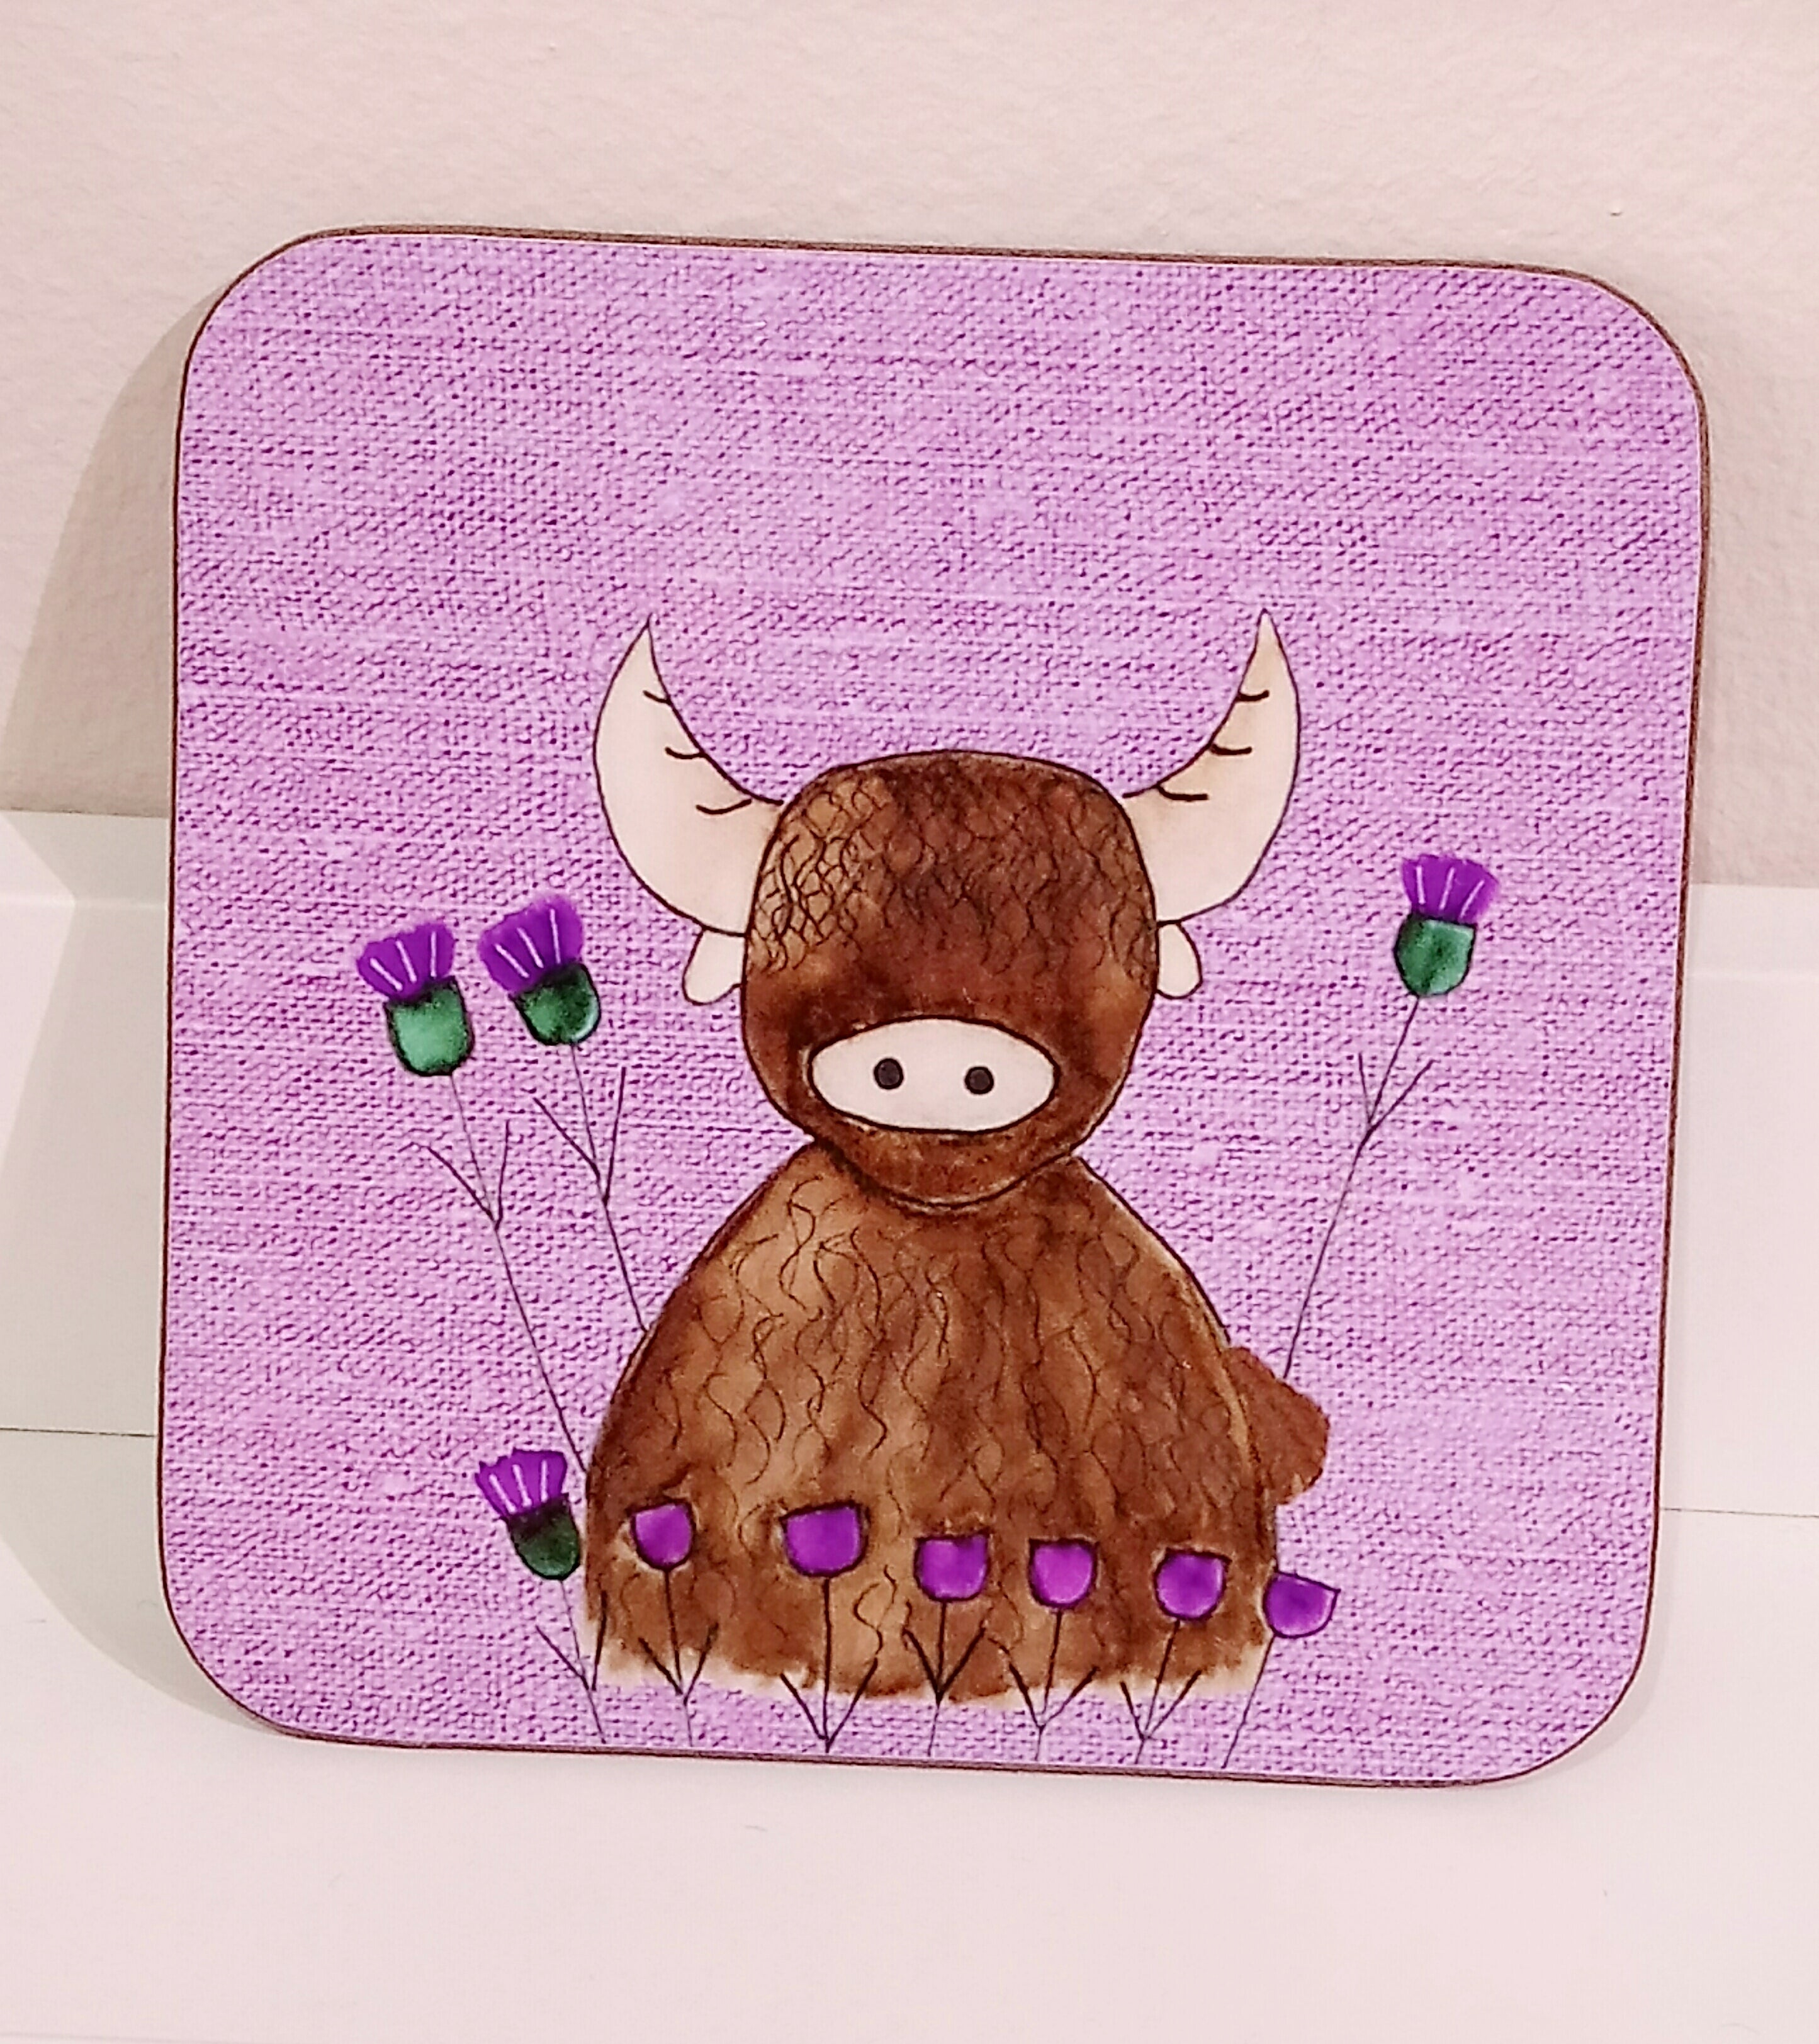 'Angus the Highland Cow' Coaster by Deborah Cameron